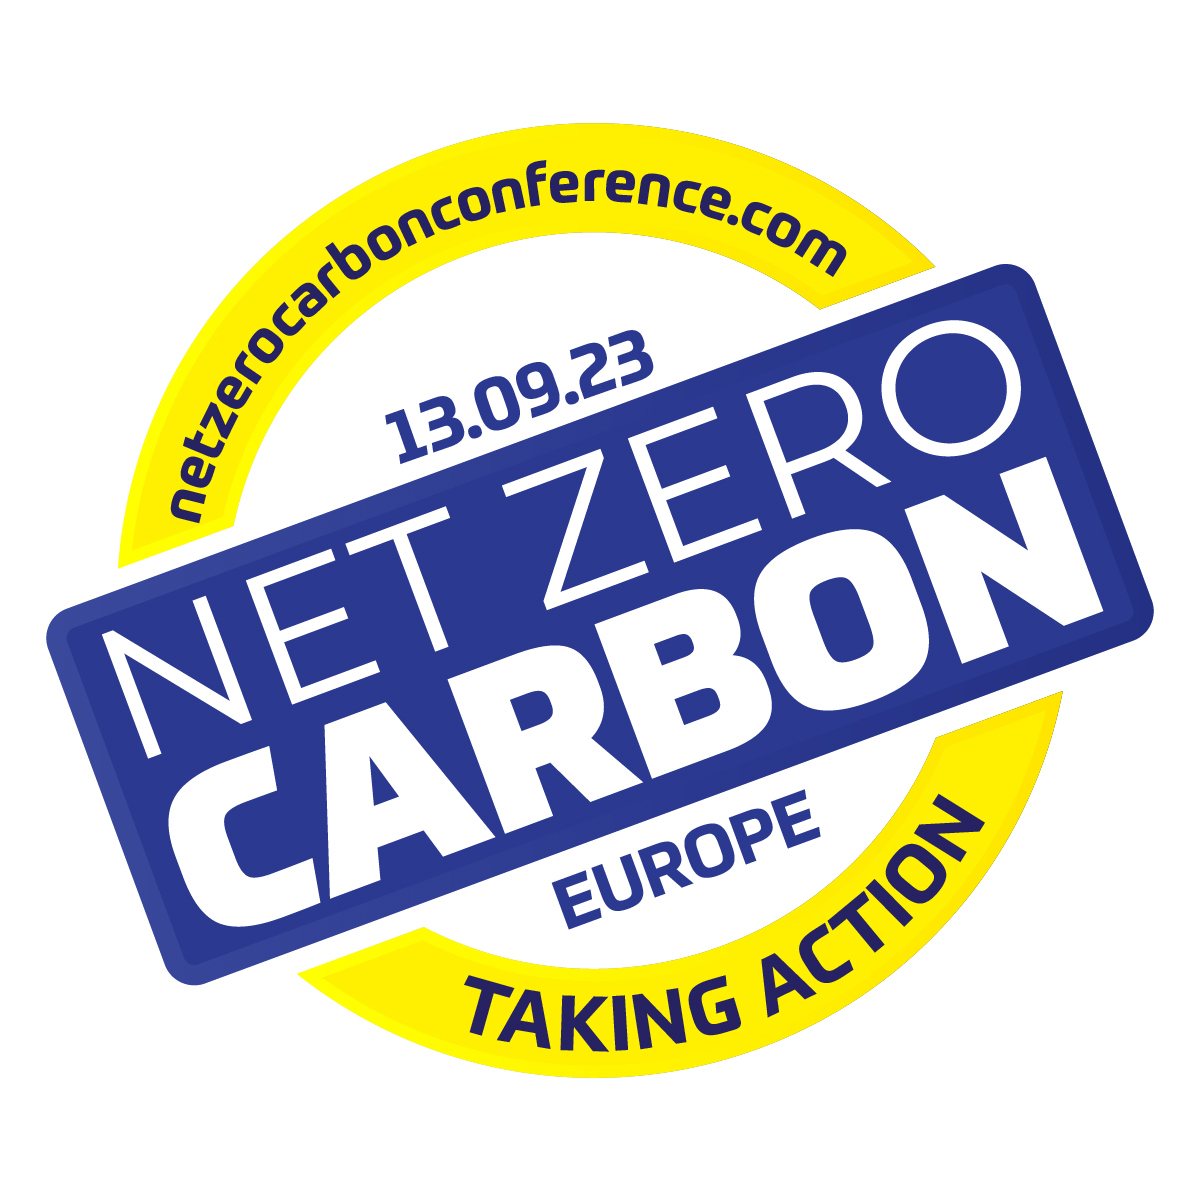 The Net Zero Carbon Conference